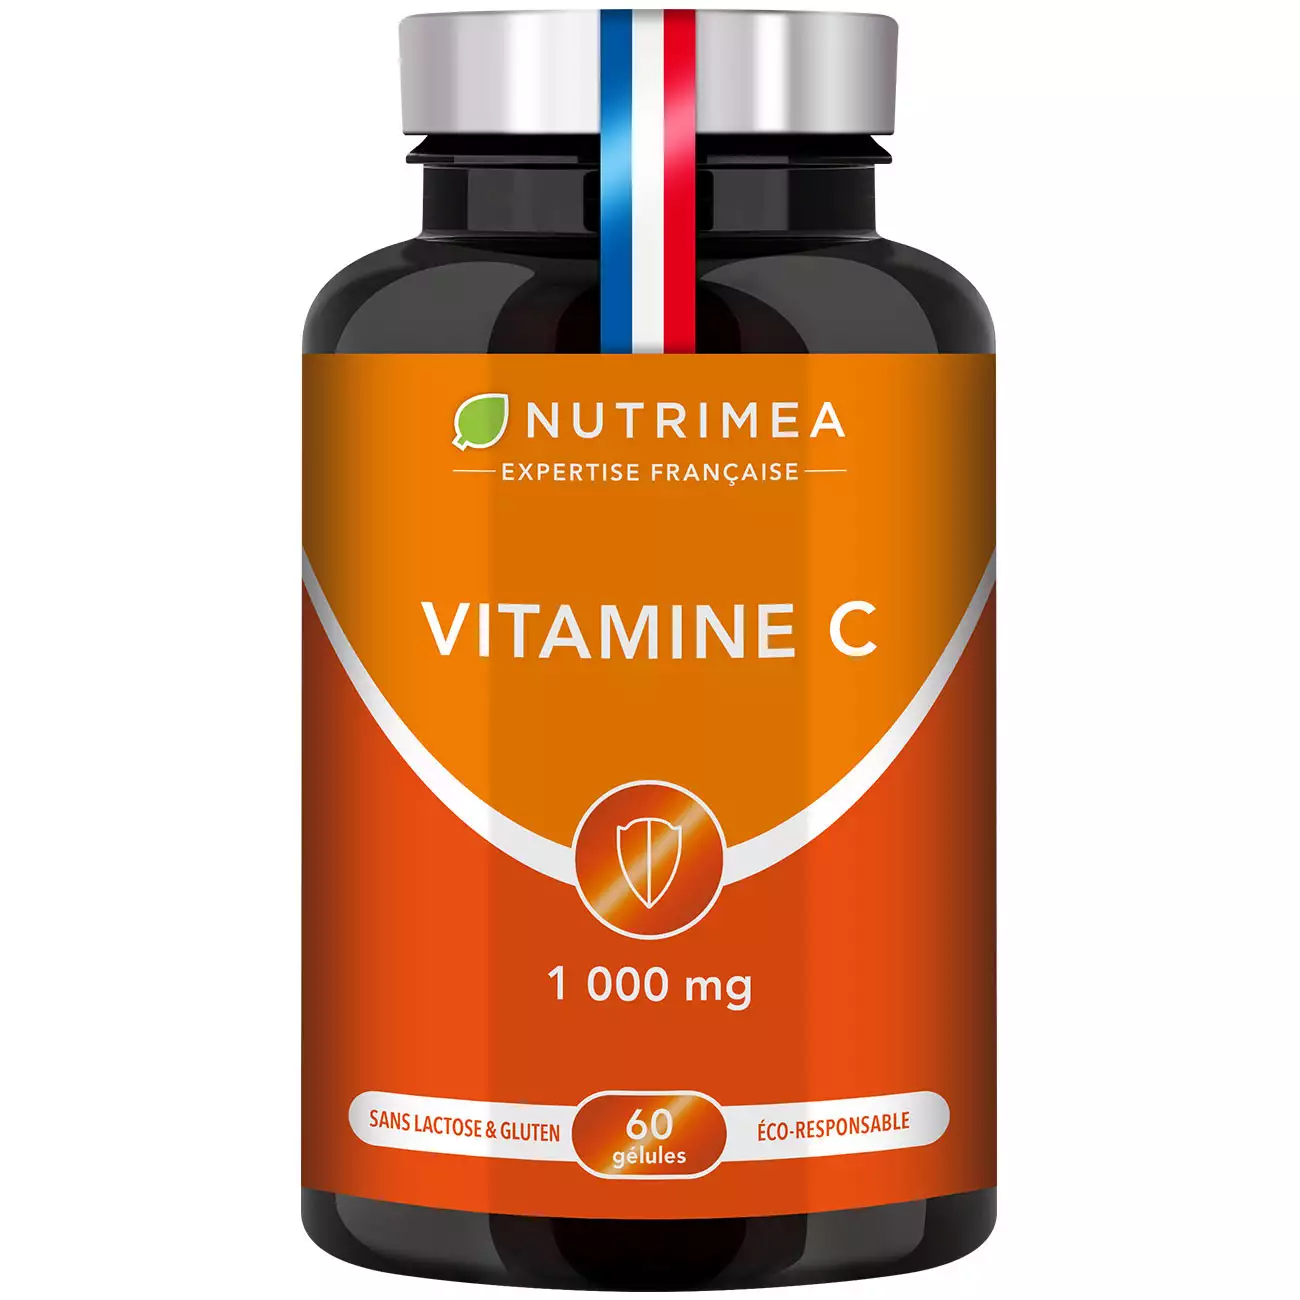 Fond blanc du pilulier de Vitamine C 1000 mg